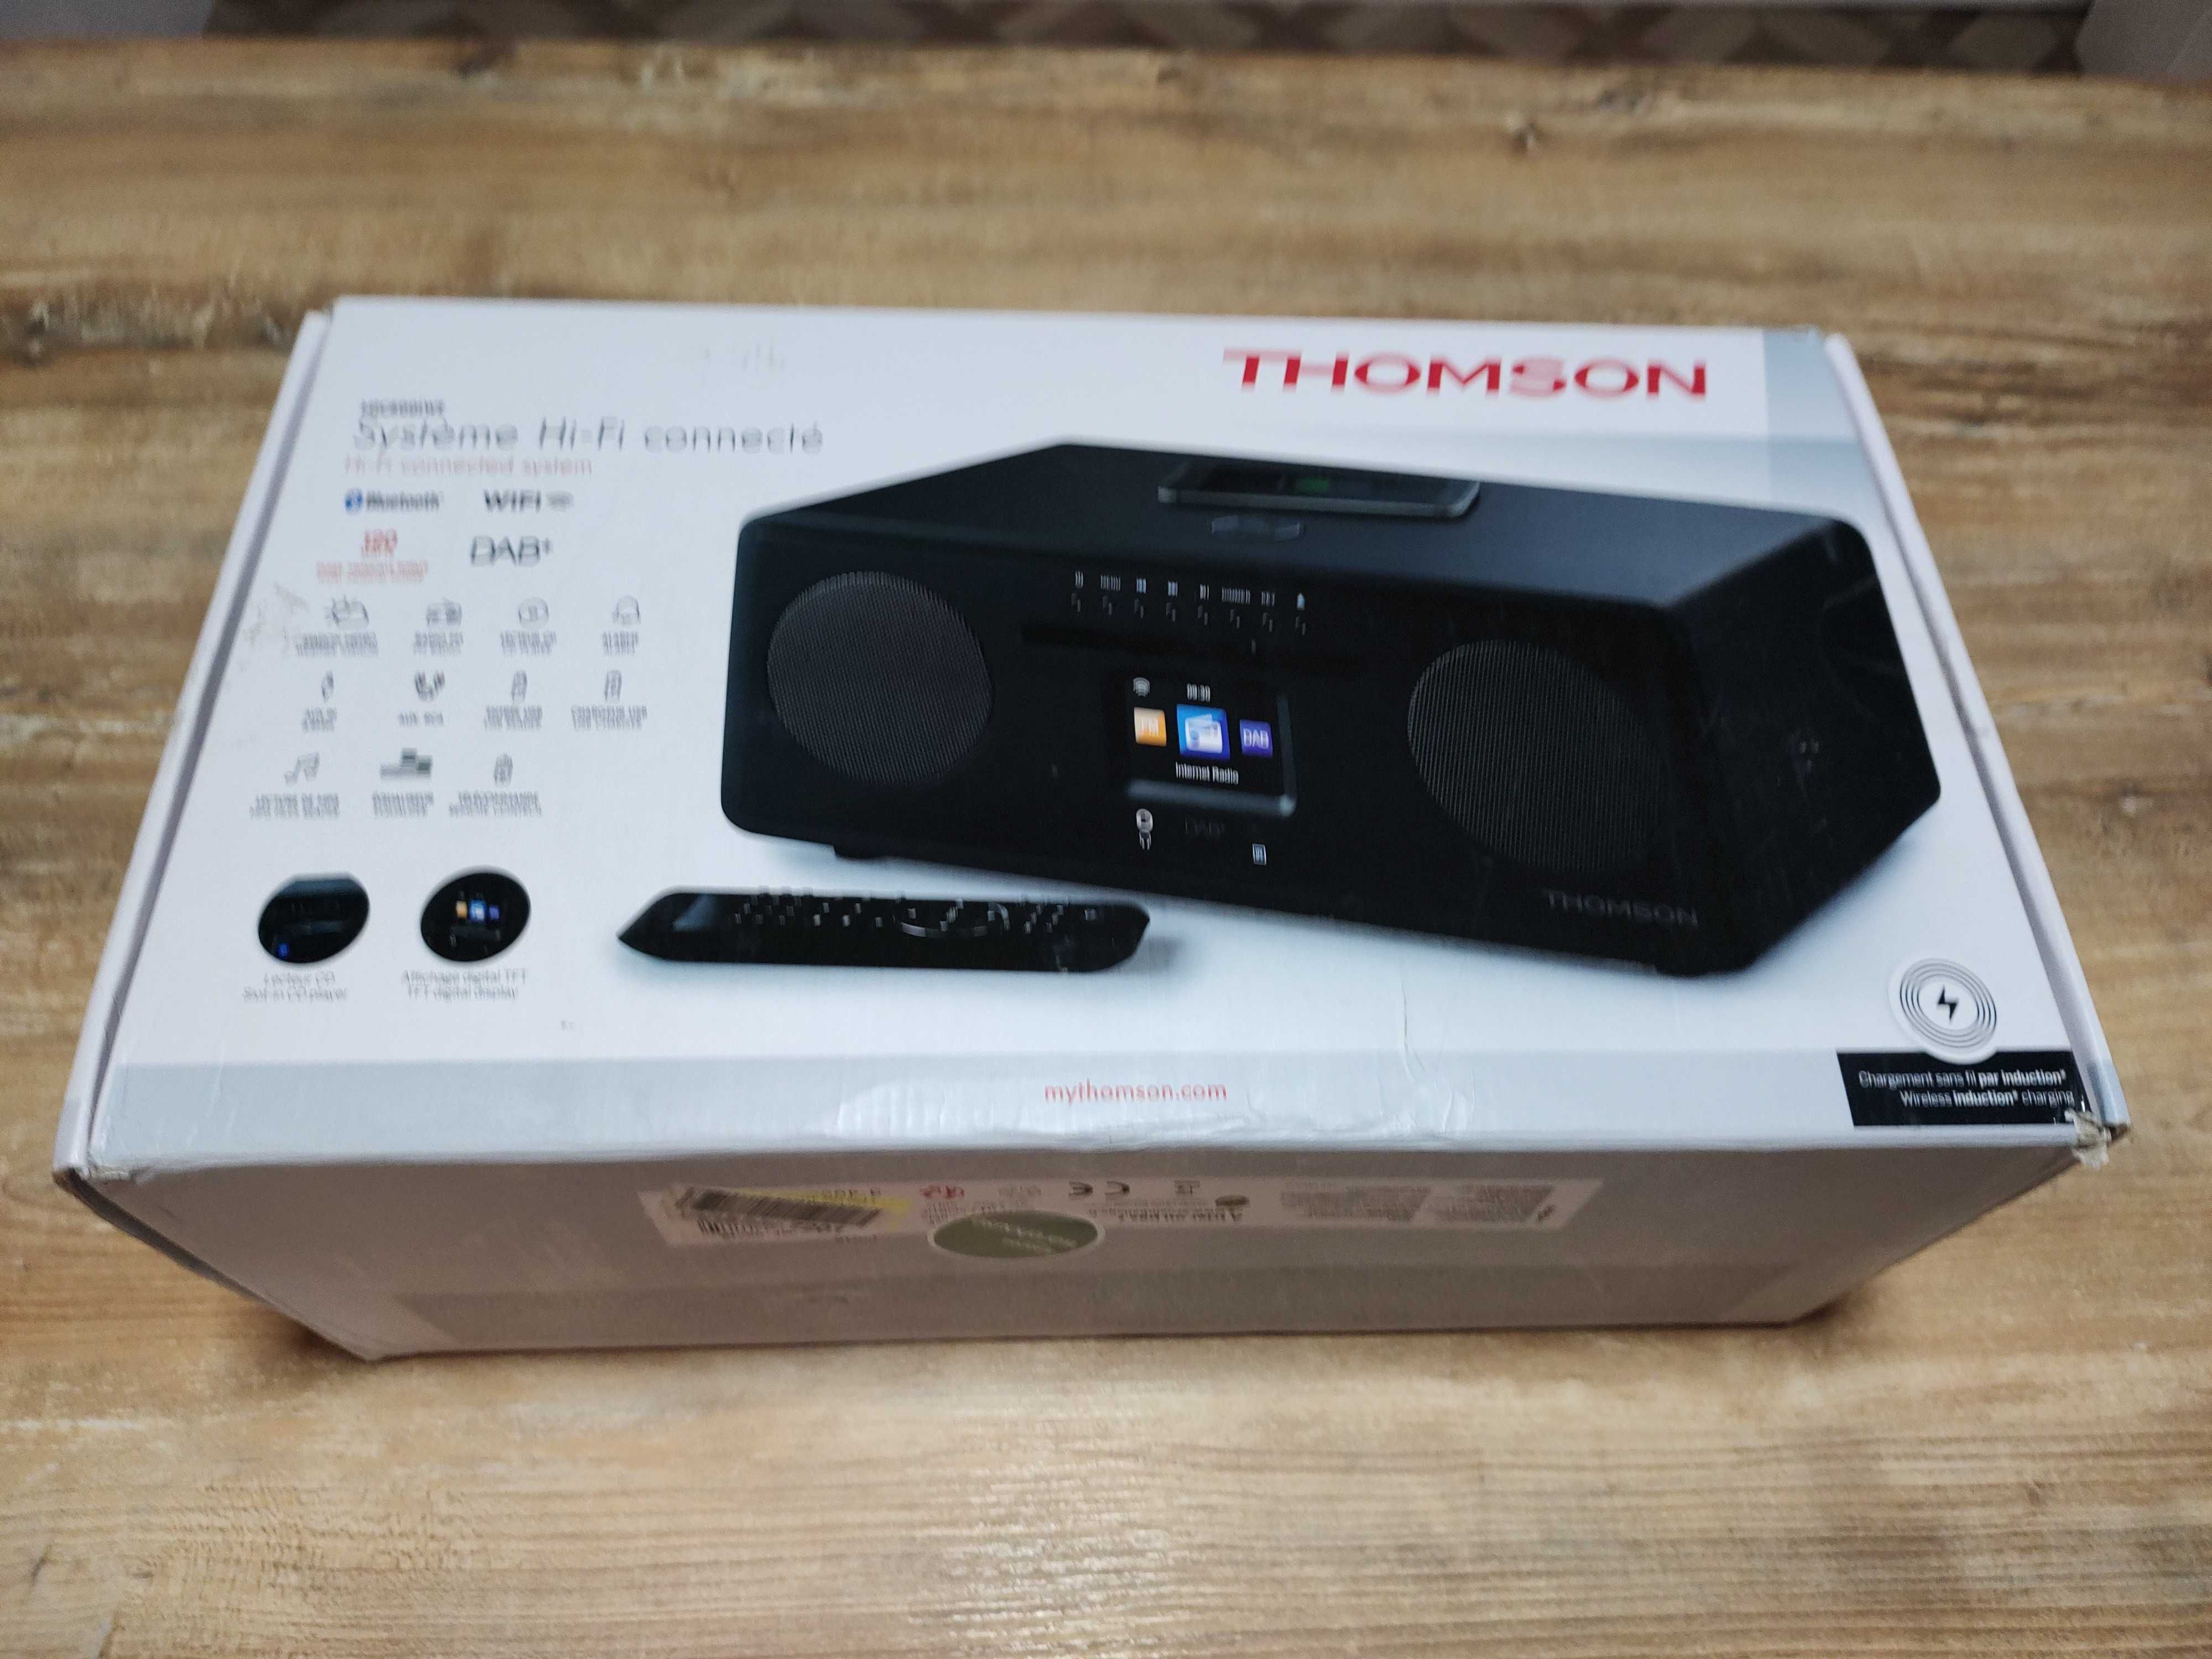 Sistem audio HI FI All-in-One Thomson MIC500IWF, NEGOCIABIL